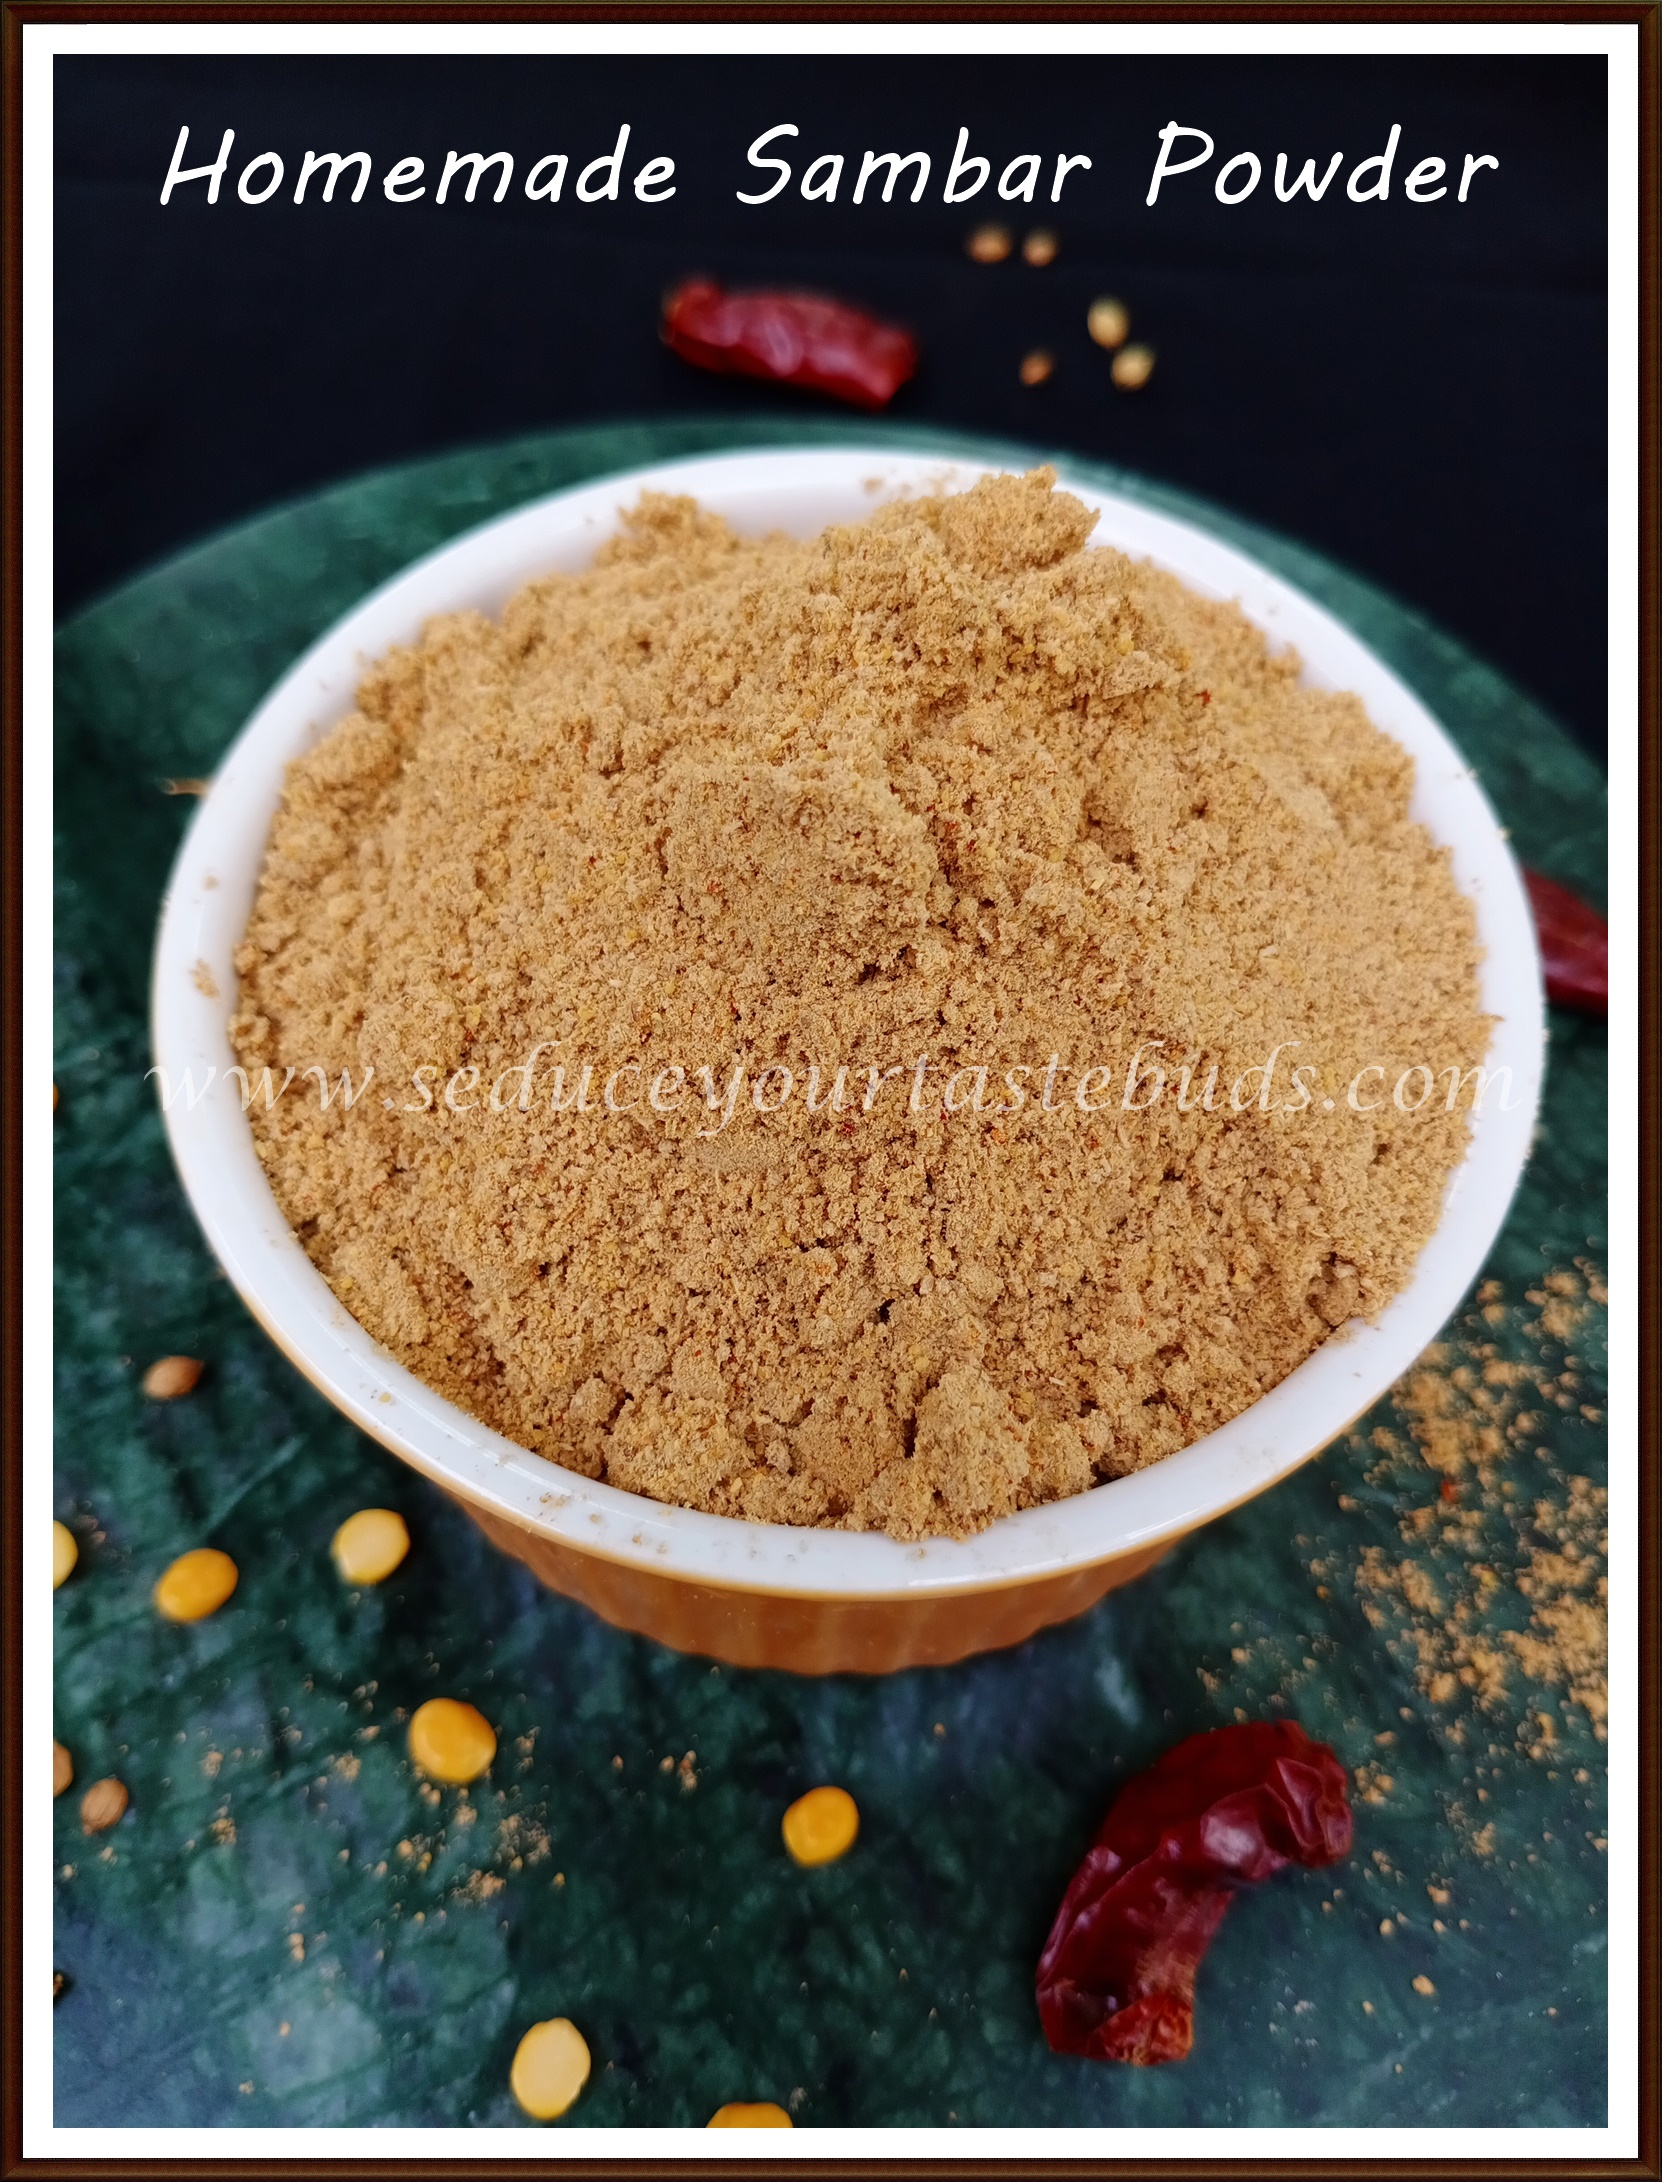 Homemade Sambar Powder Recipe